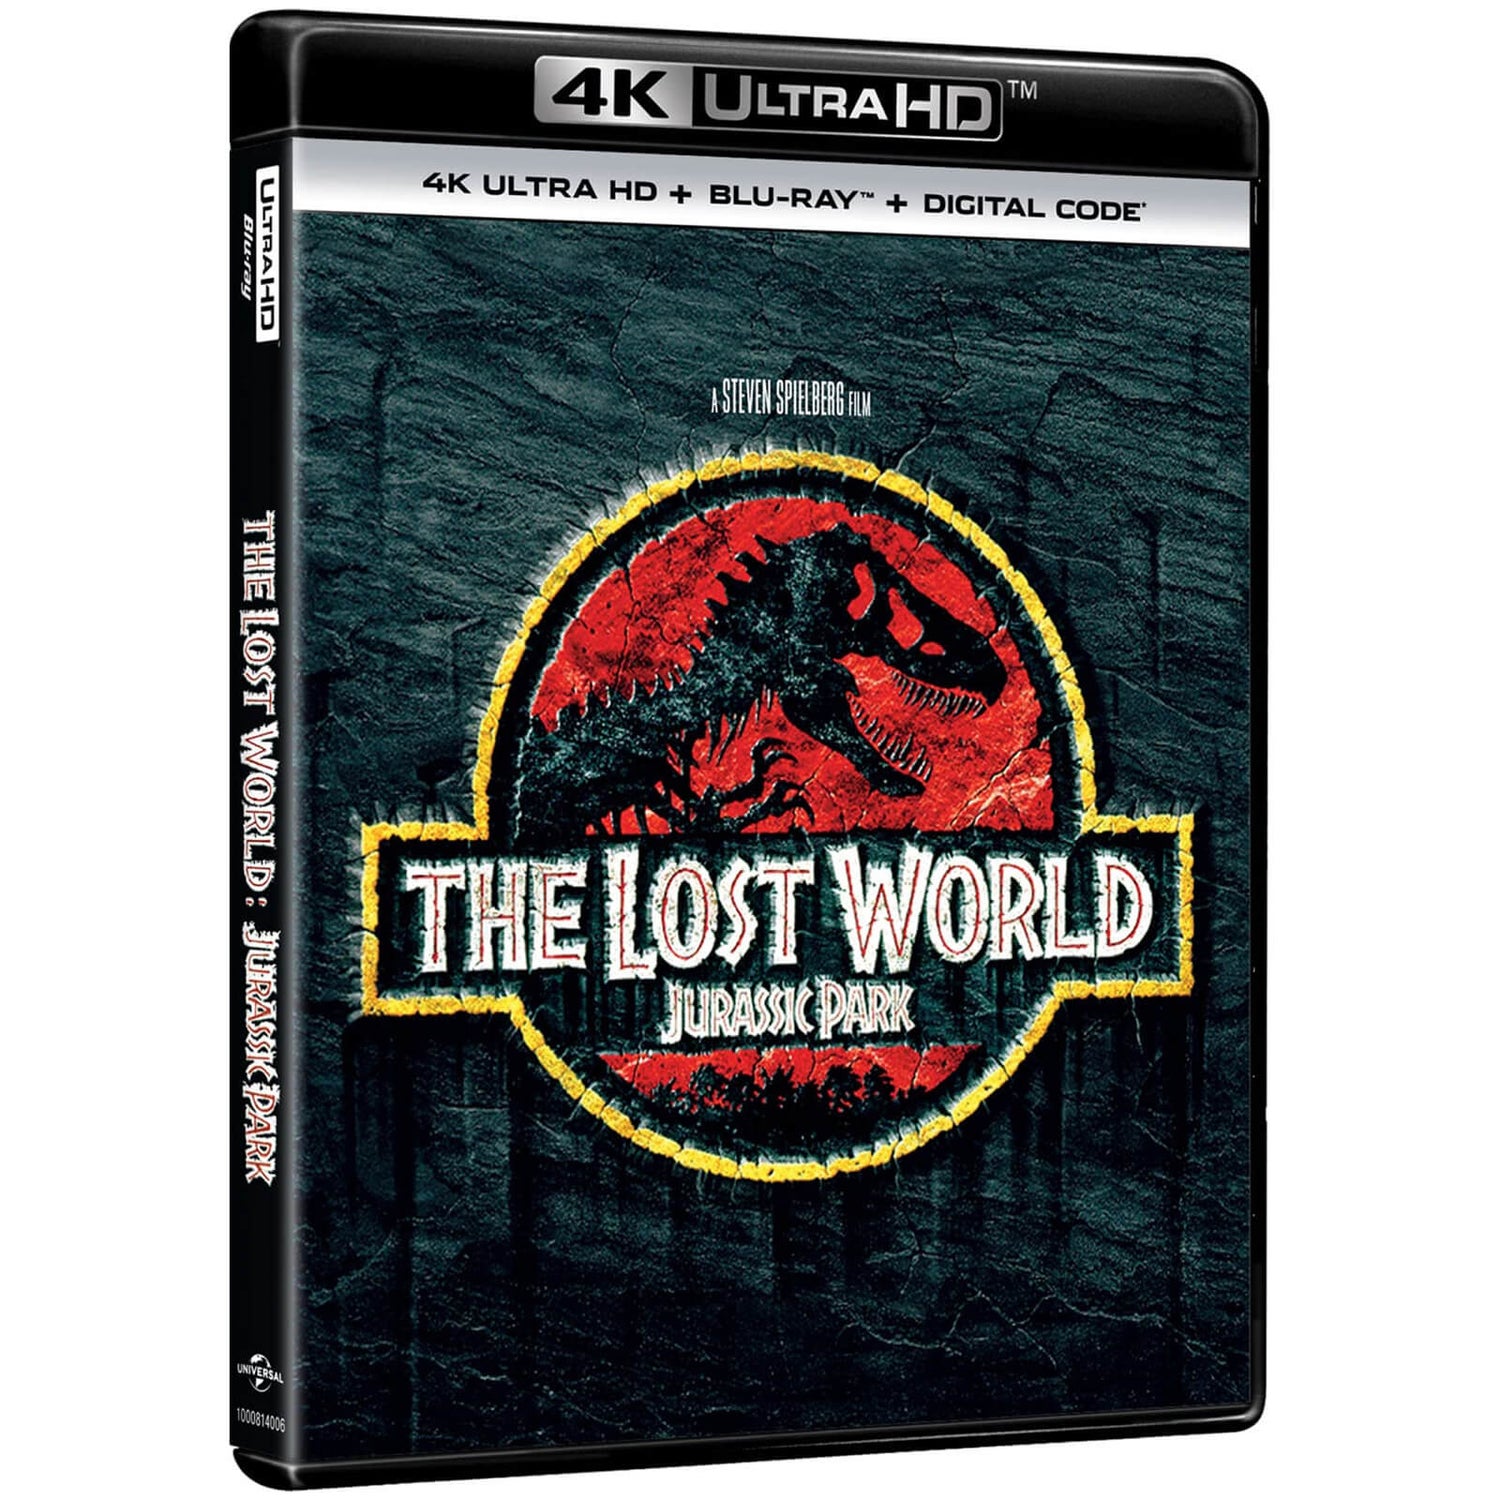 The Lost World: Jurassic Park - 4K Ultra HD (Includes Blu-ray)